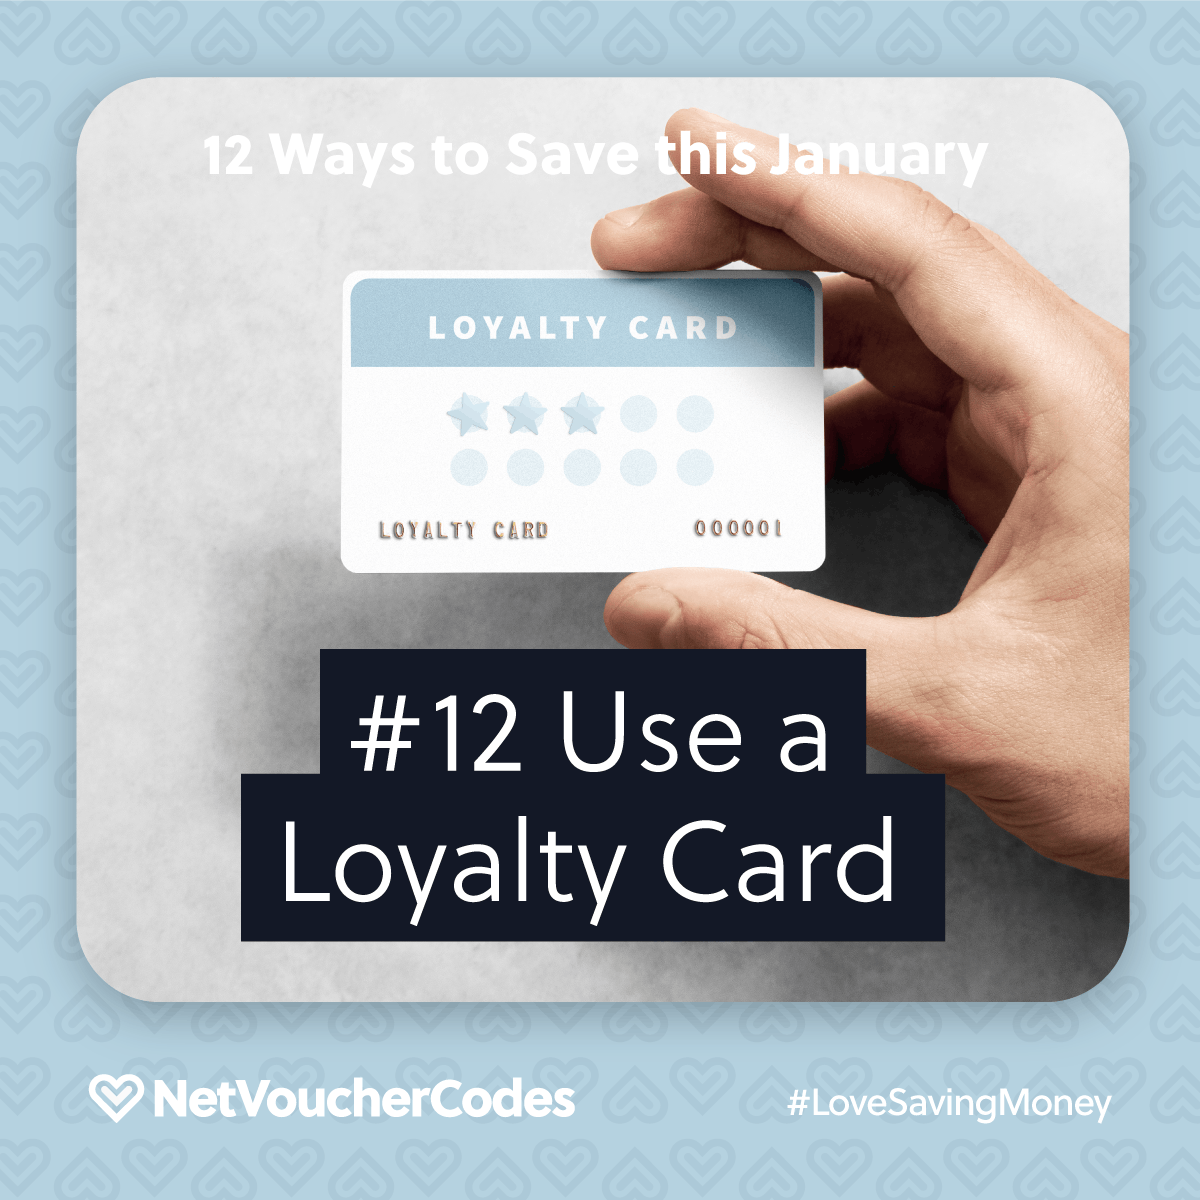 Use a loyalty card